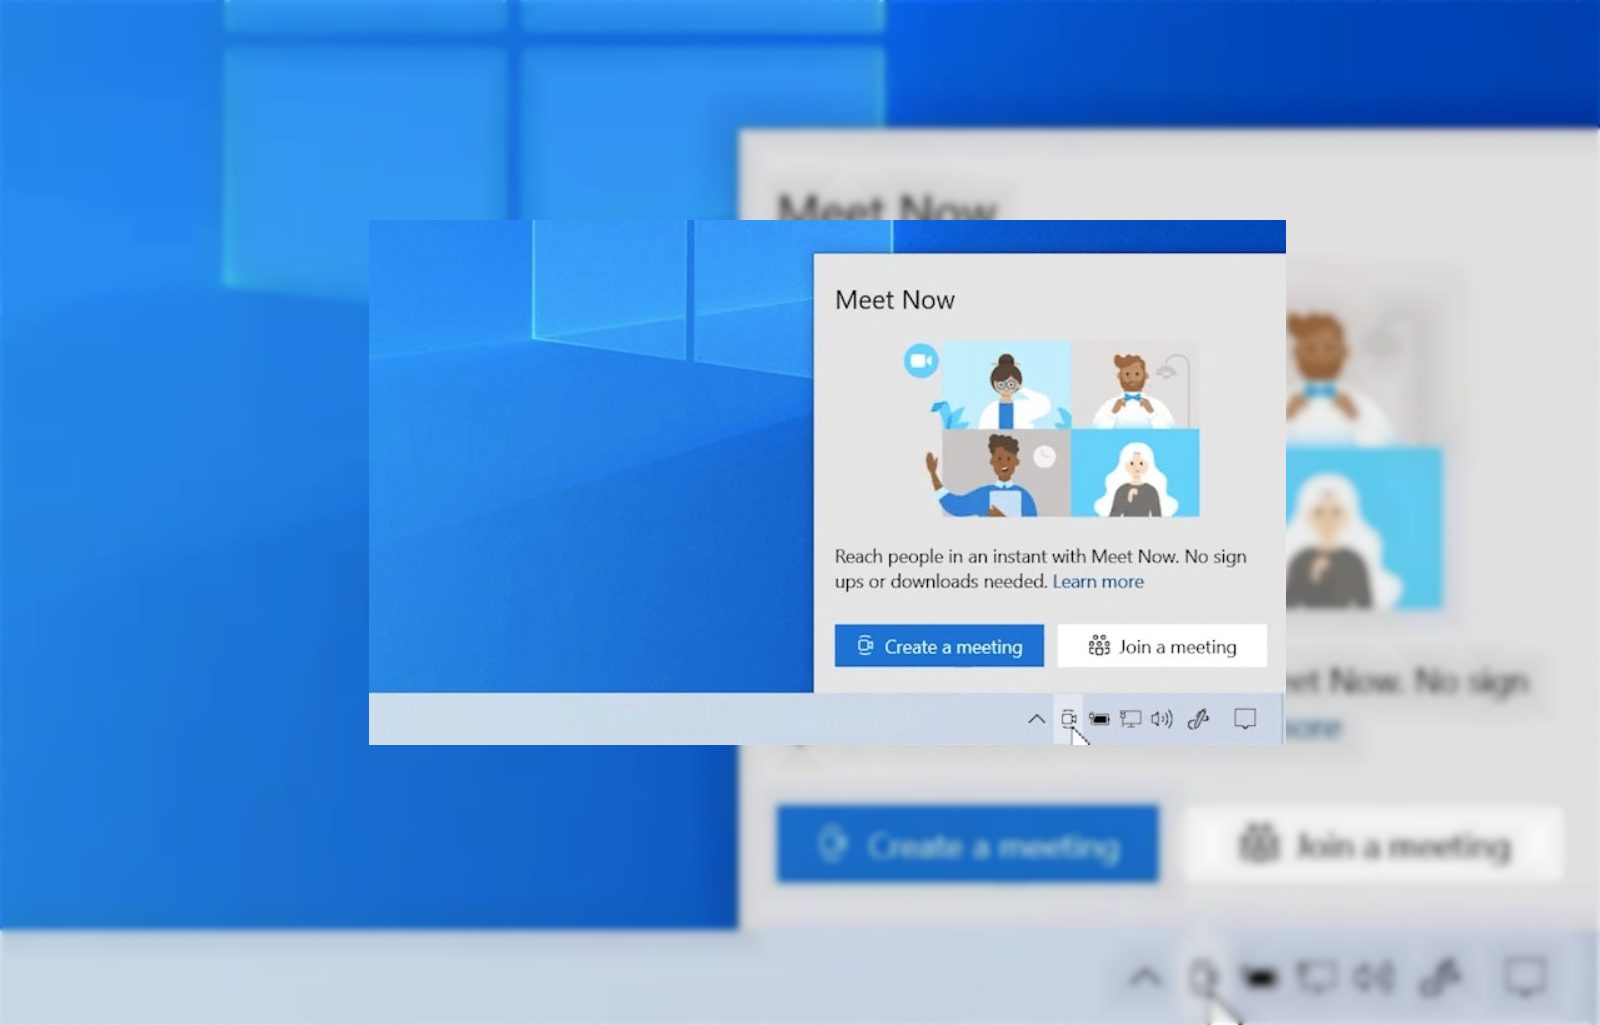 Windows 10 Meet Now from Skype / source Microsoft